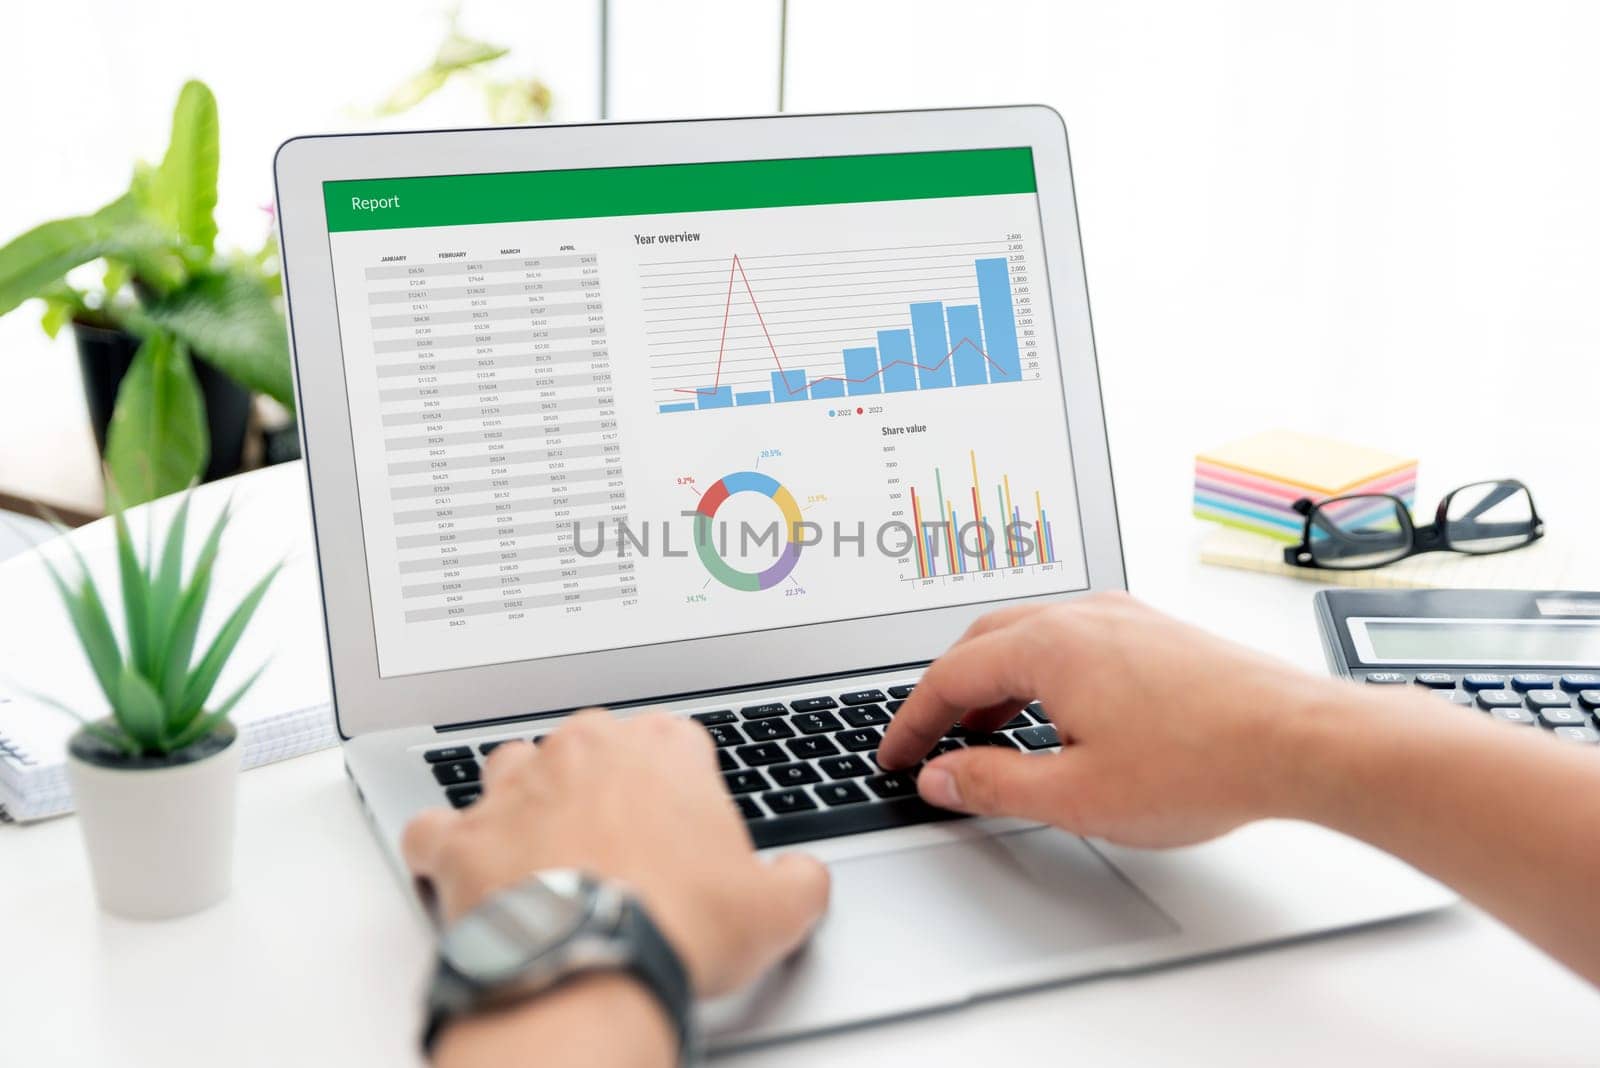 Analyzing data for marketing plan. Business analytics, spreadsheet app on laptop